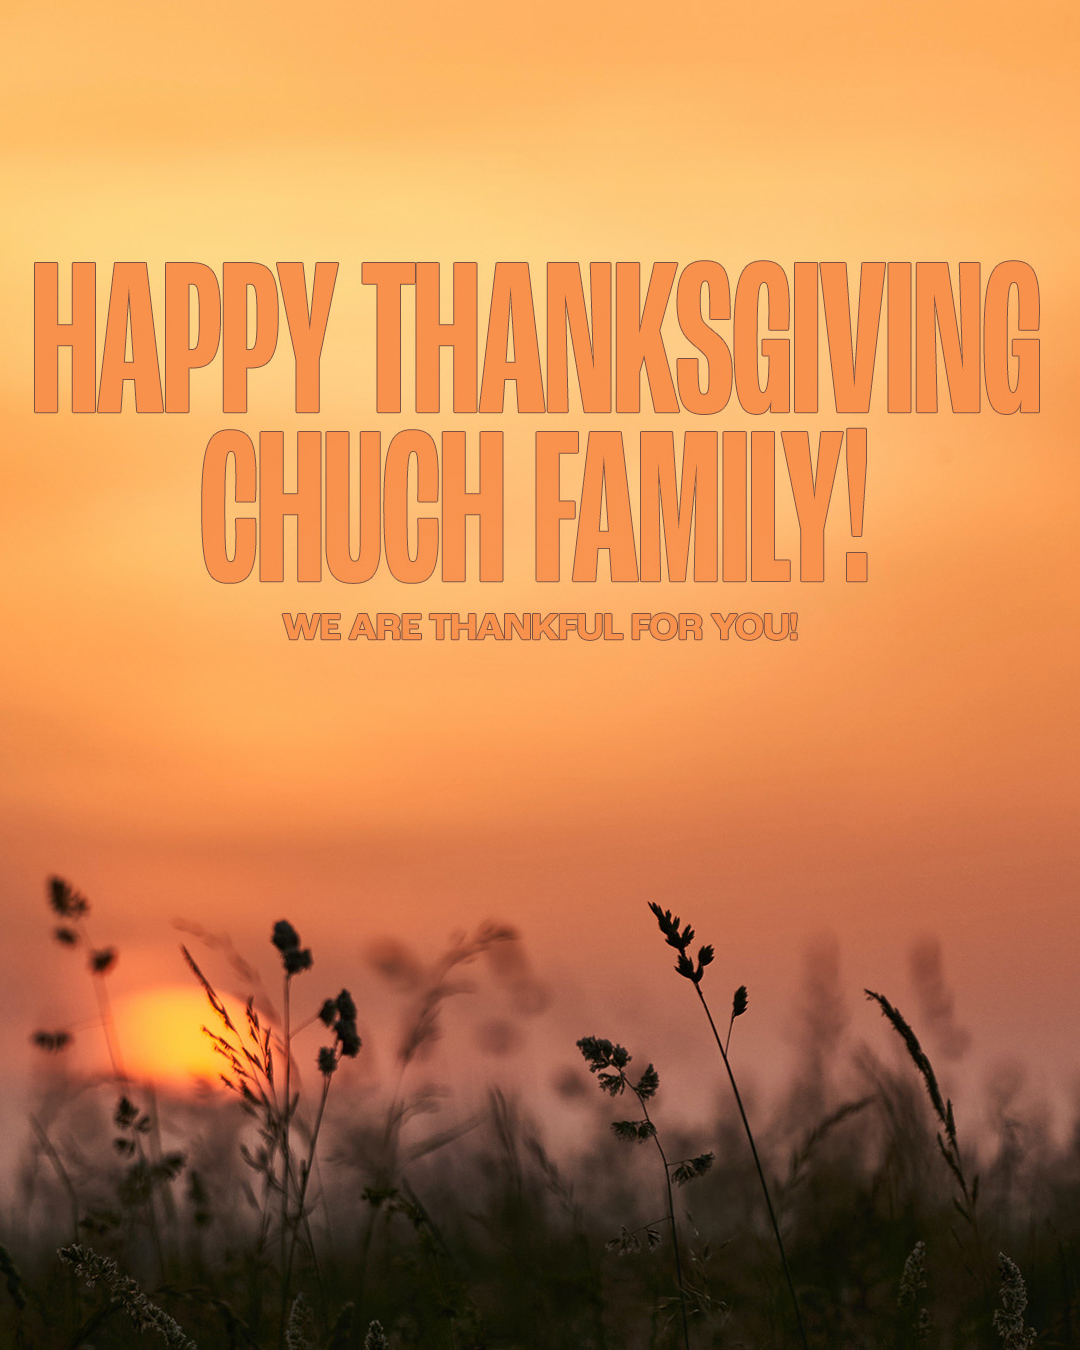 Happy Thanksgiving Church Family!